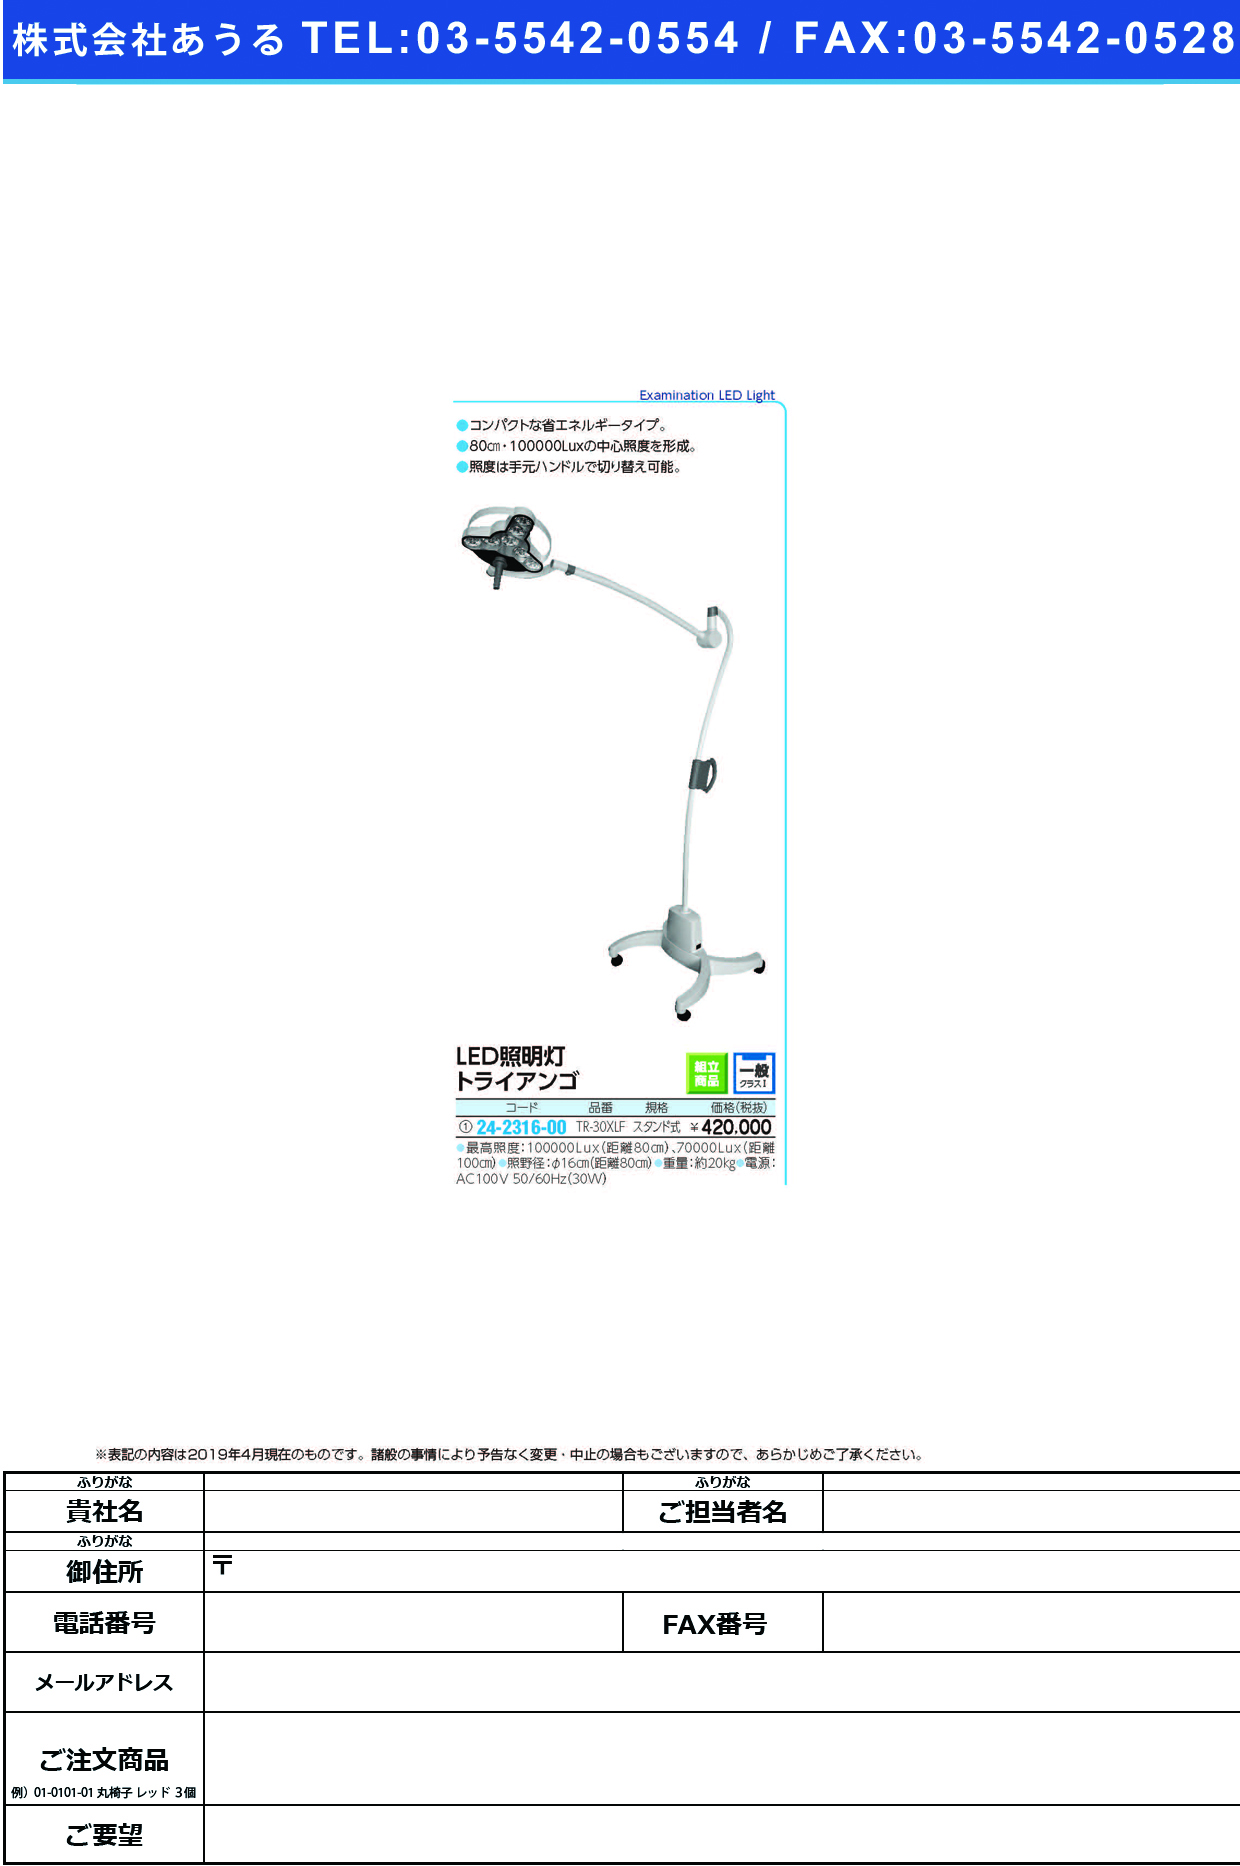 (24-2316-00)ＬＥＤ照明灯トライアンゴ TR-30XLF LEDｼｮｳﾒｲﾄｳﾄﾗｲｱﾝﾄｺﾞ【1台単位】【2019年カタログ商品】